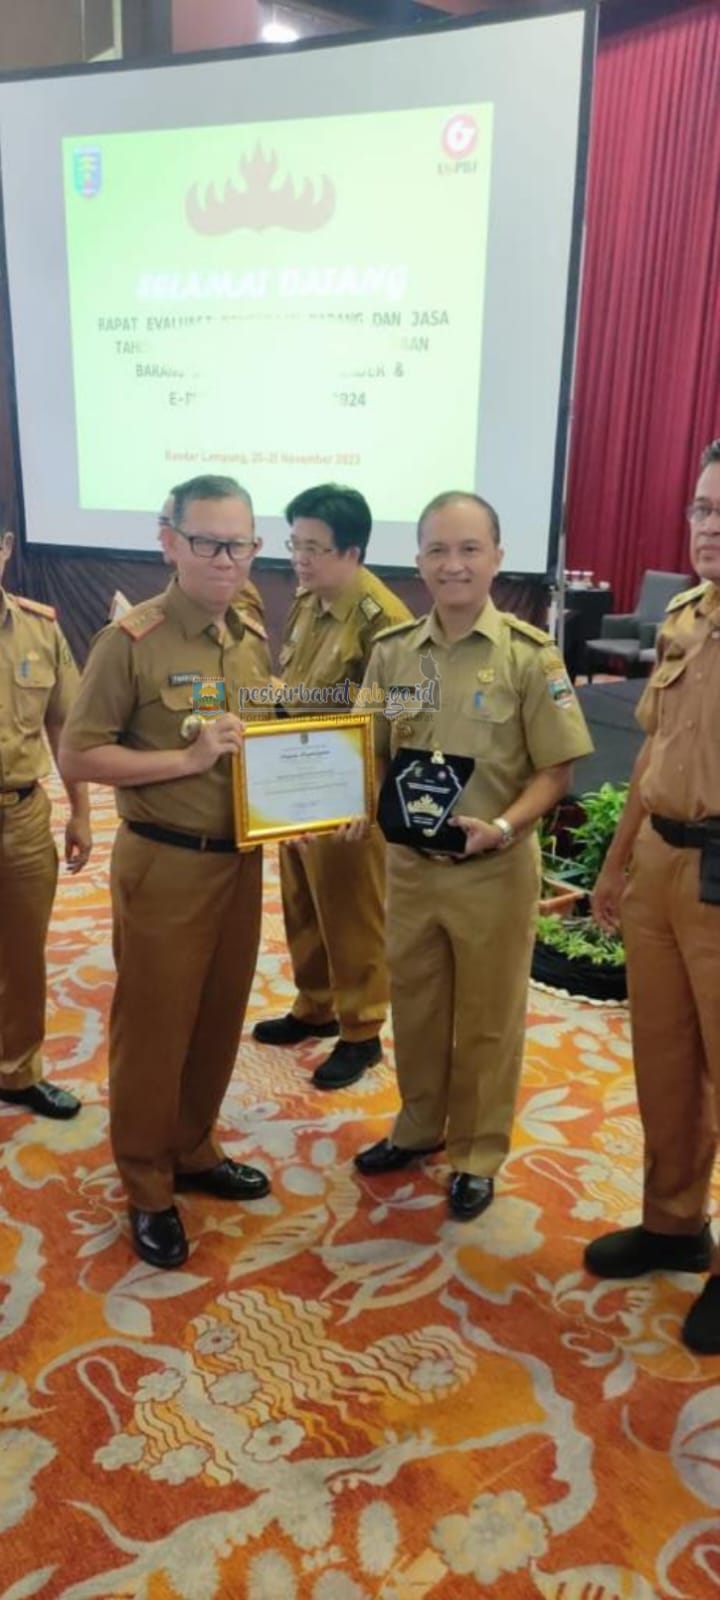 Pemkab Pesibar terima penghargaan dari Pemprov, Kategori Penyerapan Produk dalam Negeri tertinggi di Lampung